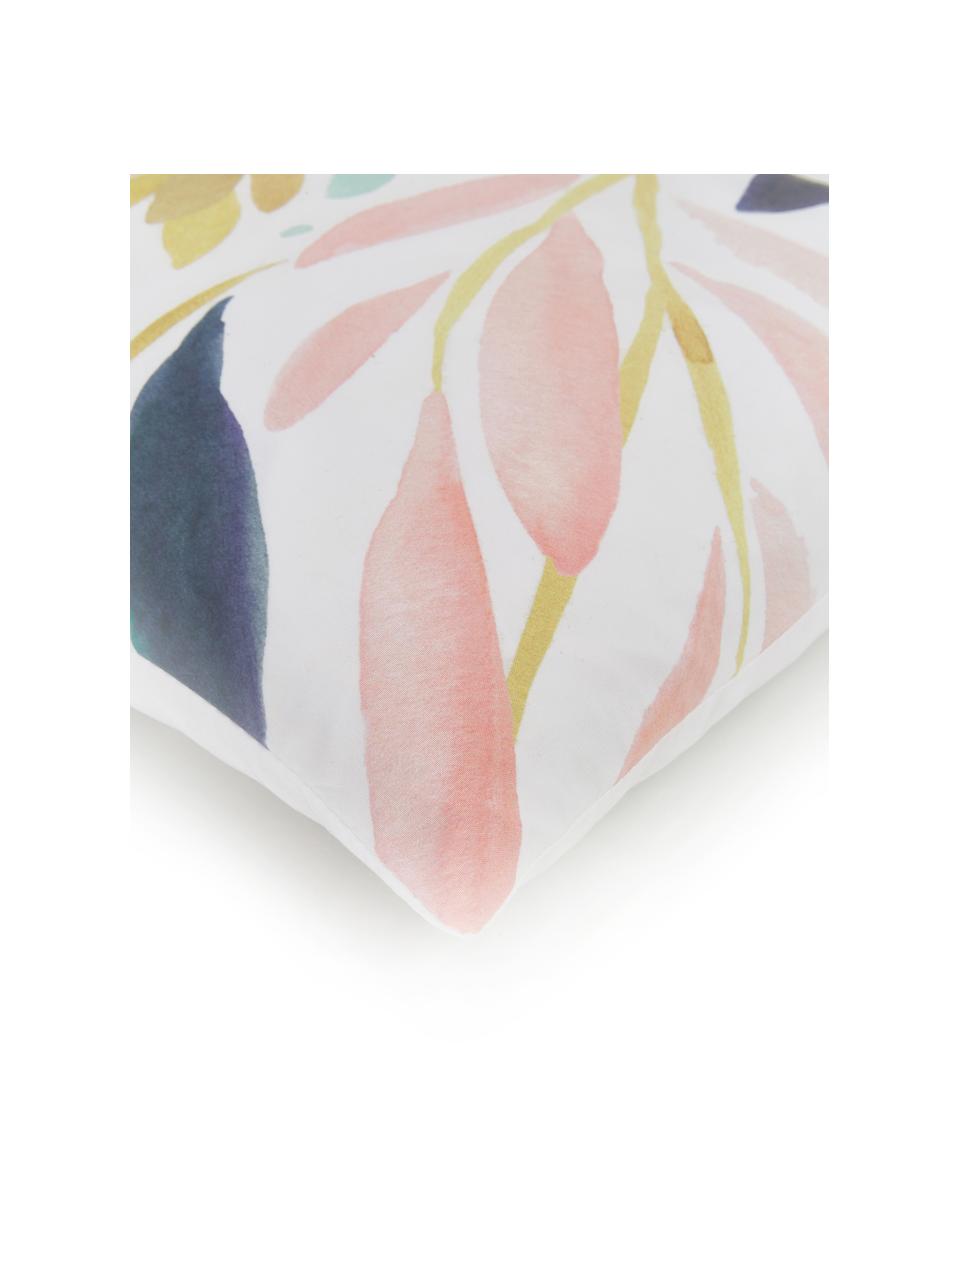 Kussenhoes Agia met aquarel print, Polyester, Wit, donkerblauw, lichtblauw, roze, mosterdgeel, 40 x 40 cm